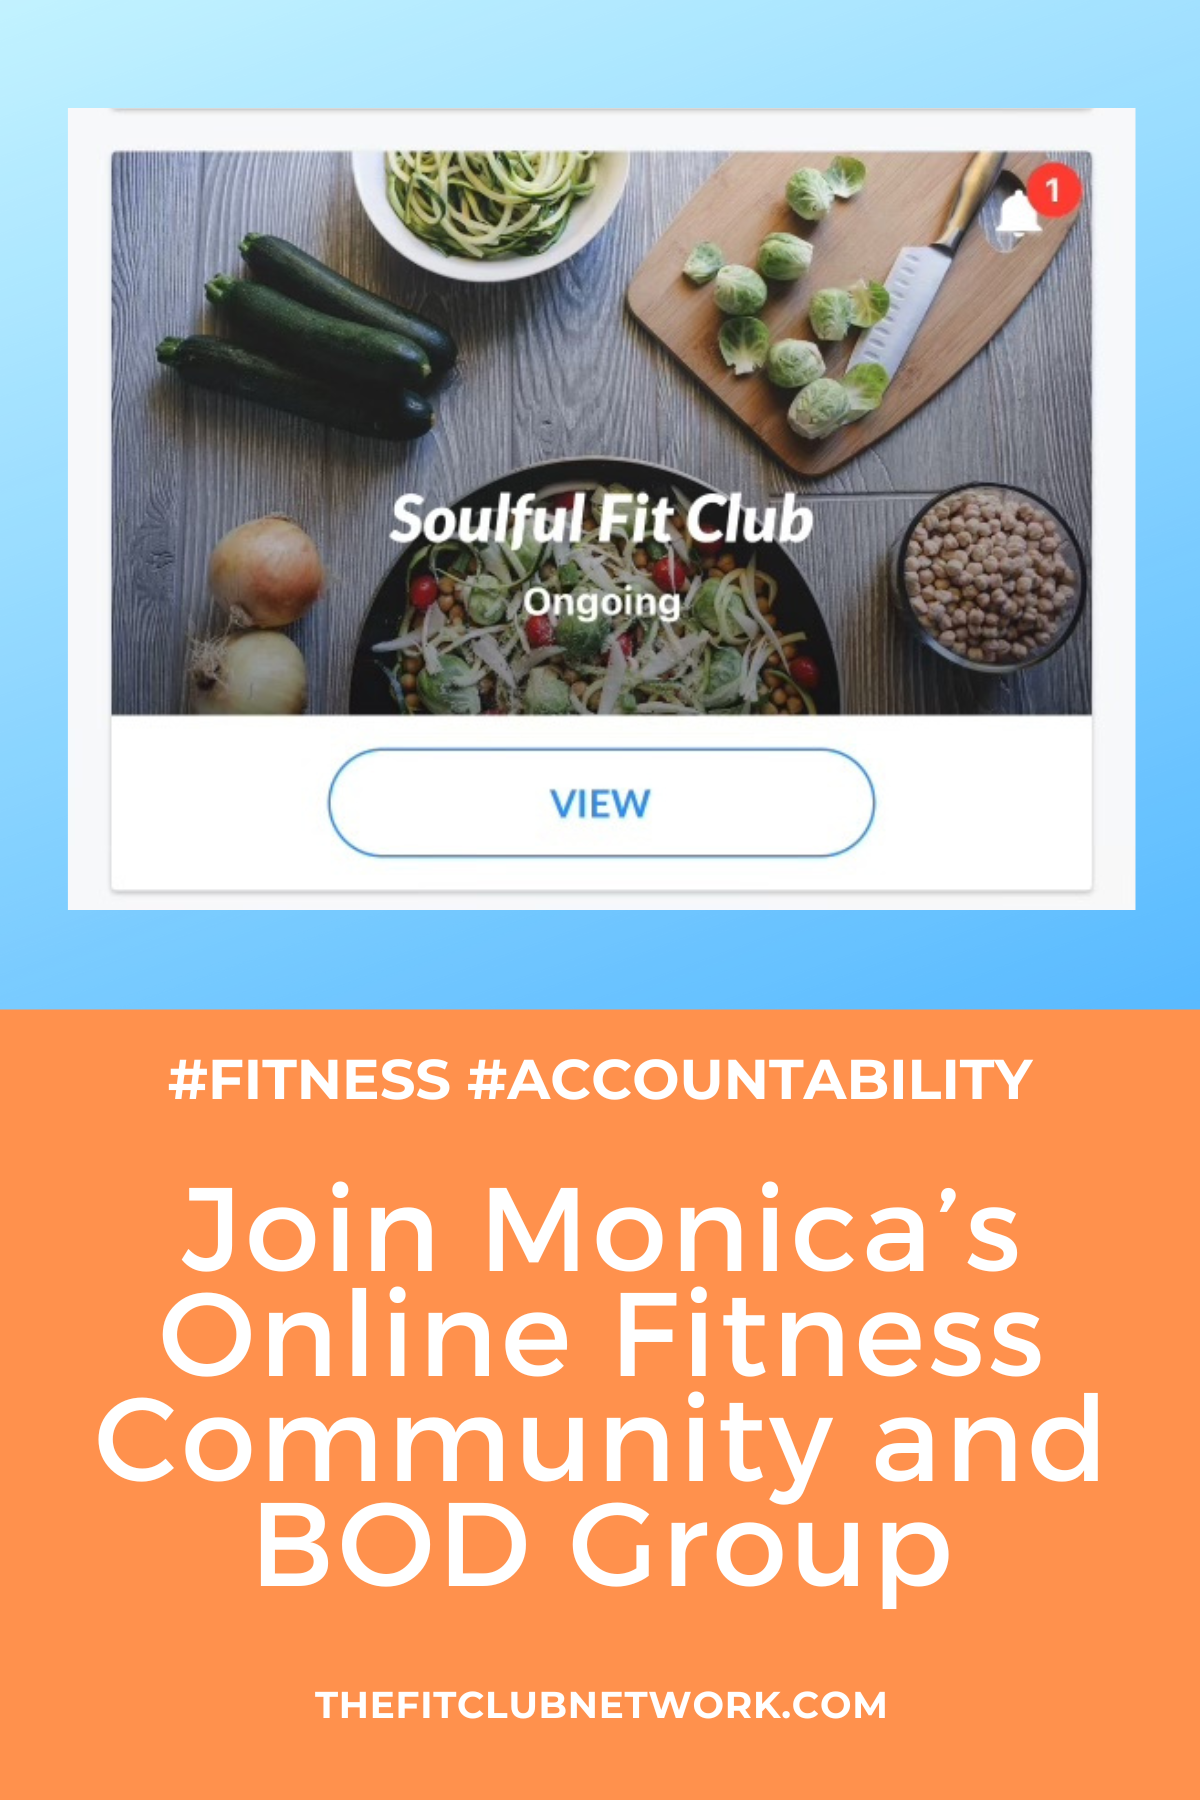 Online Fitness Community